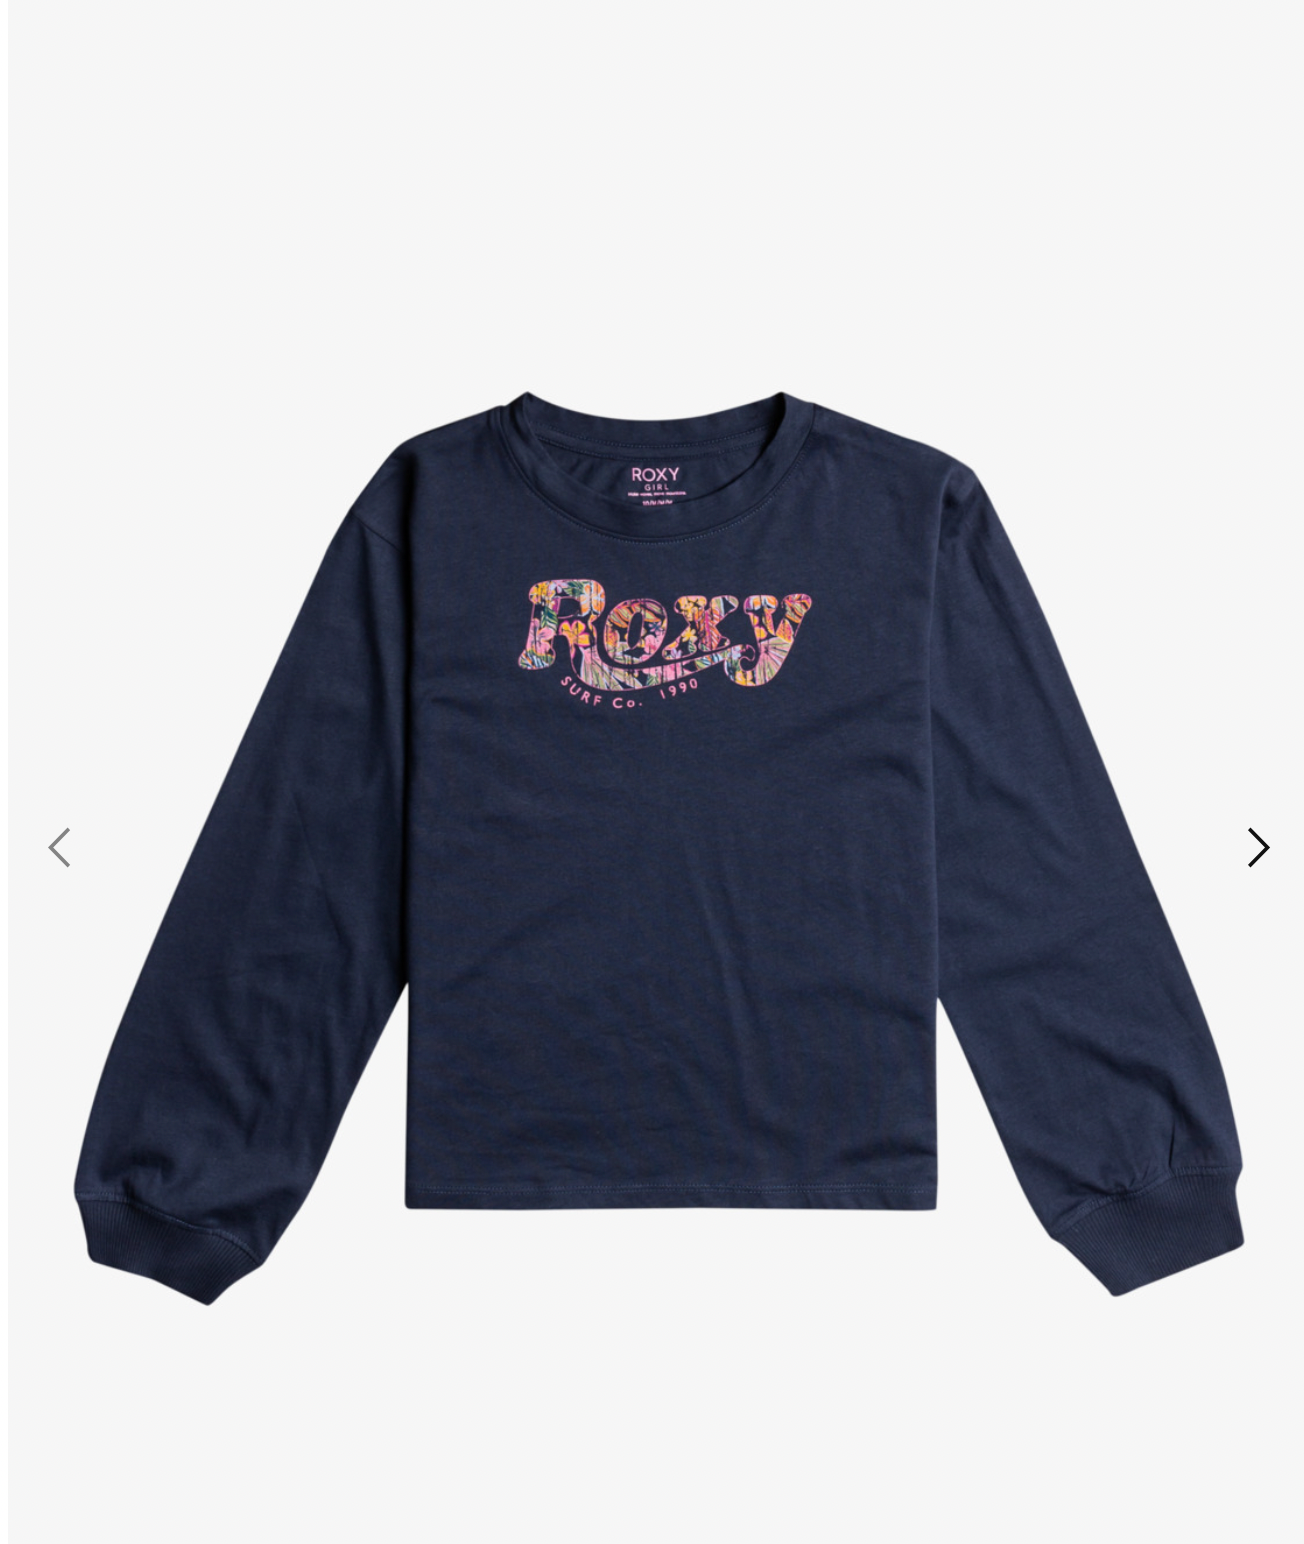 ROXY Let Somebody Go - Long Sleeve T-Shirt for Girls 4-16